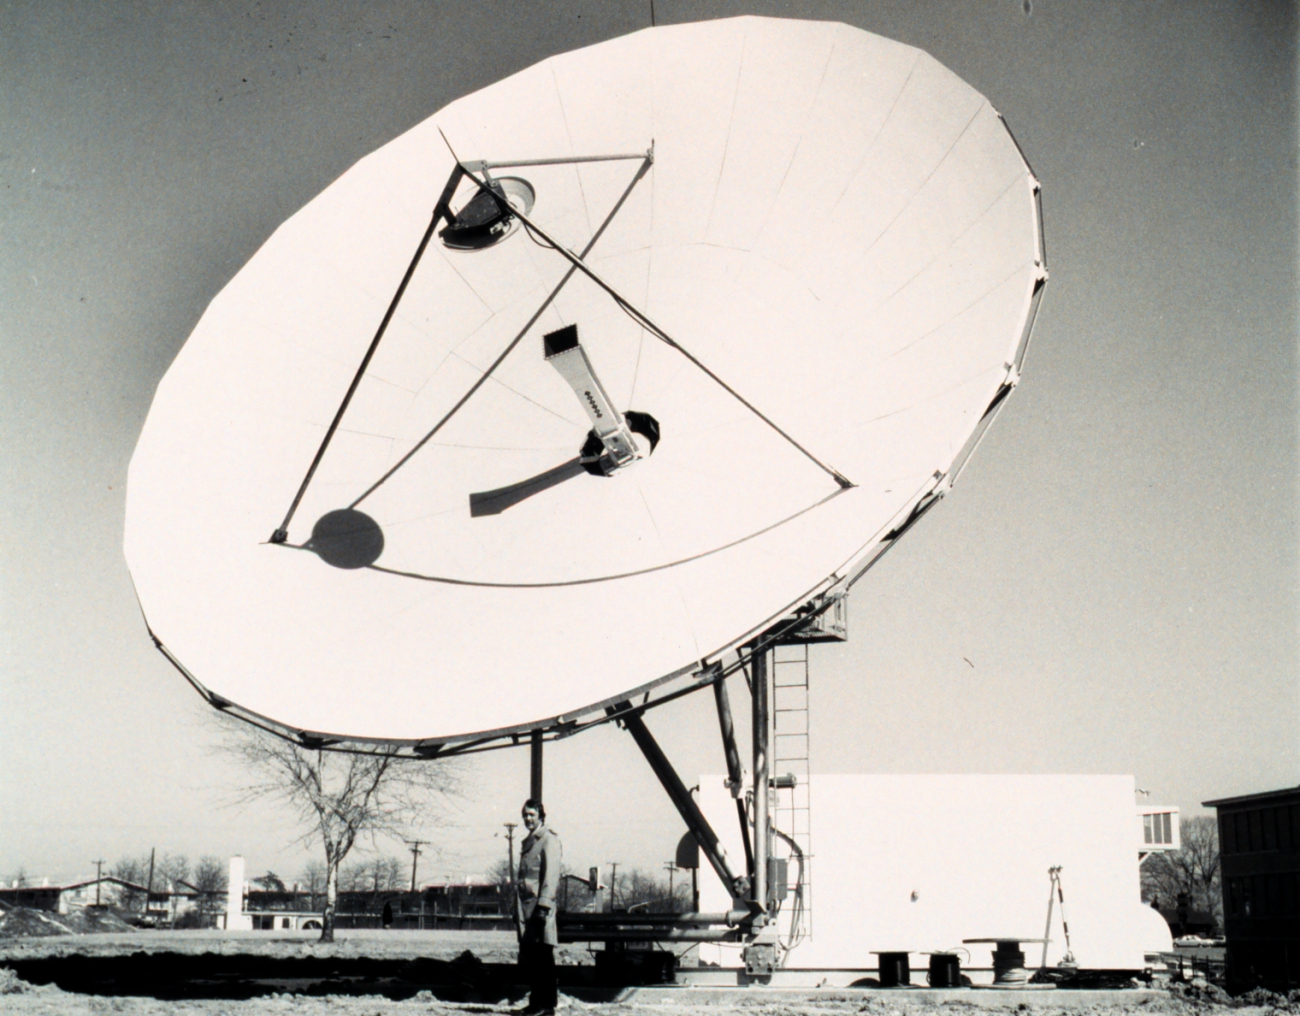 John Hussey, TIROS-N Ground System Project Manager, standing below 36-ft(11-meter) antenna